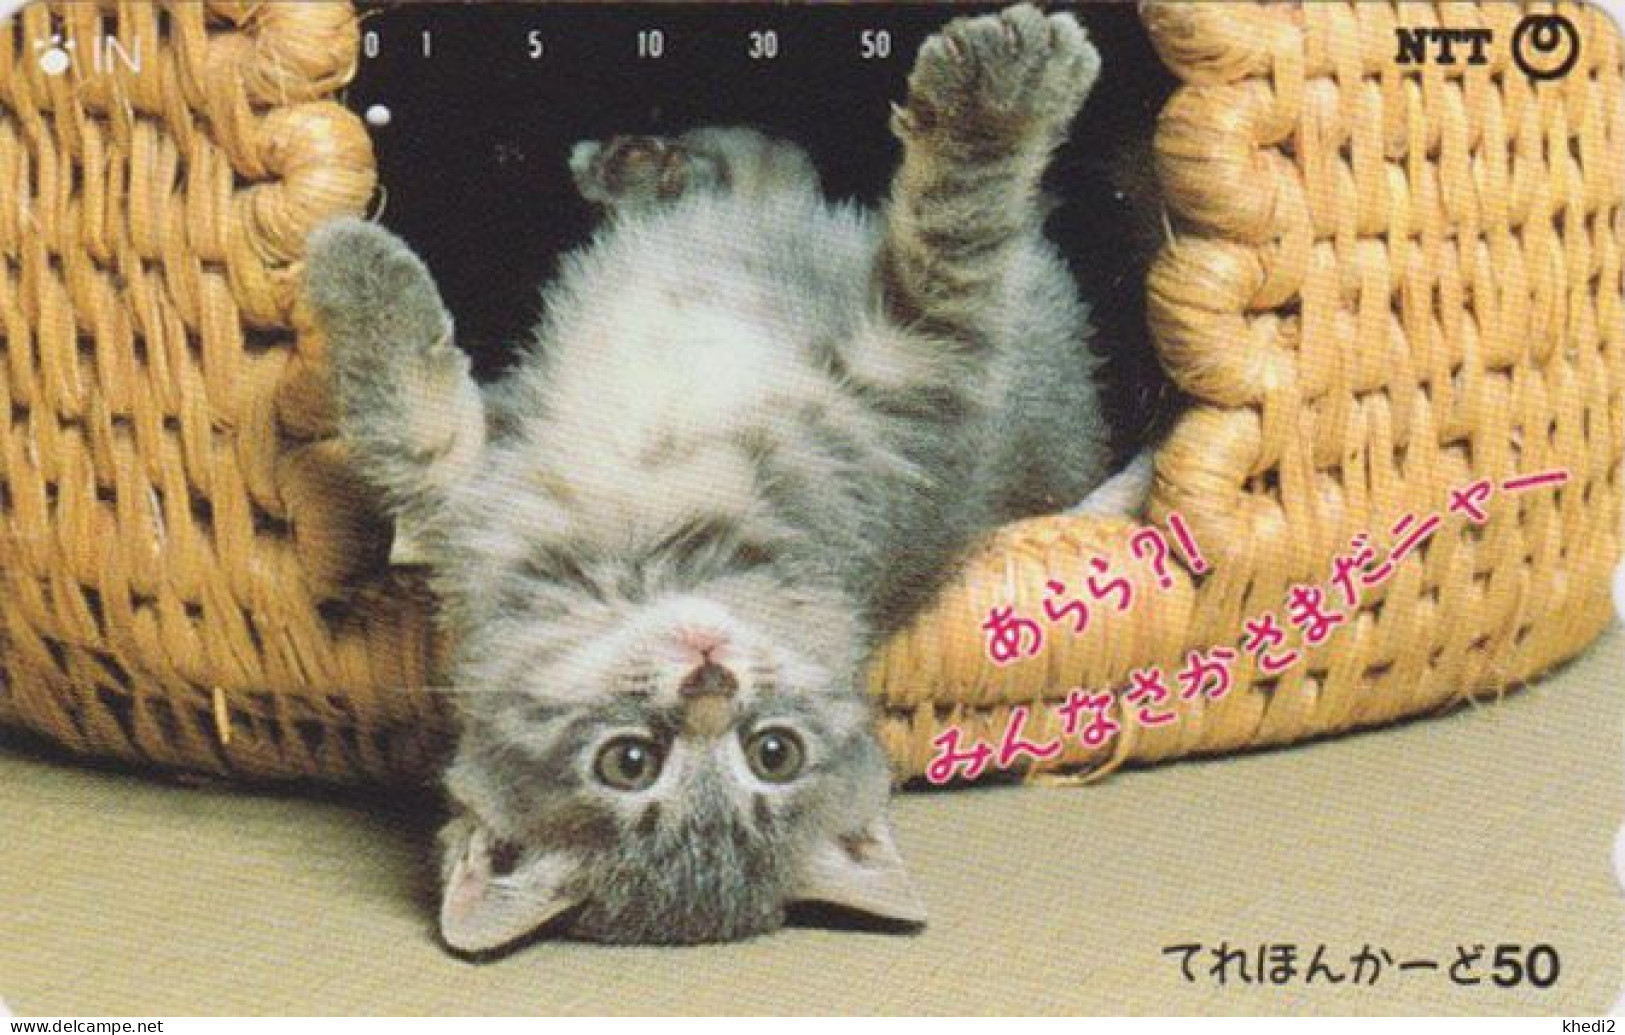 Télécarte JAPON / NTT 251-001 B ** 2 NOTCHES 1 PUNCH ** - ANIMAL CHAT - CAT JAPAN Phonecard - Katzen